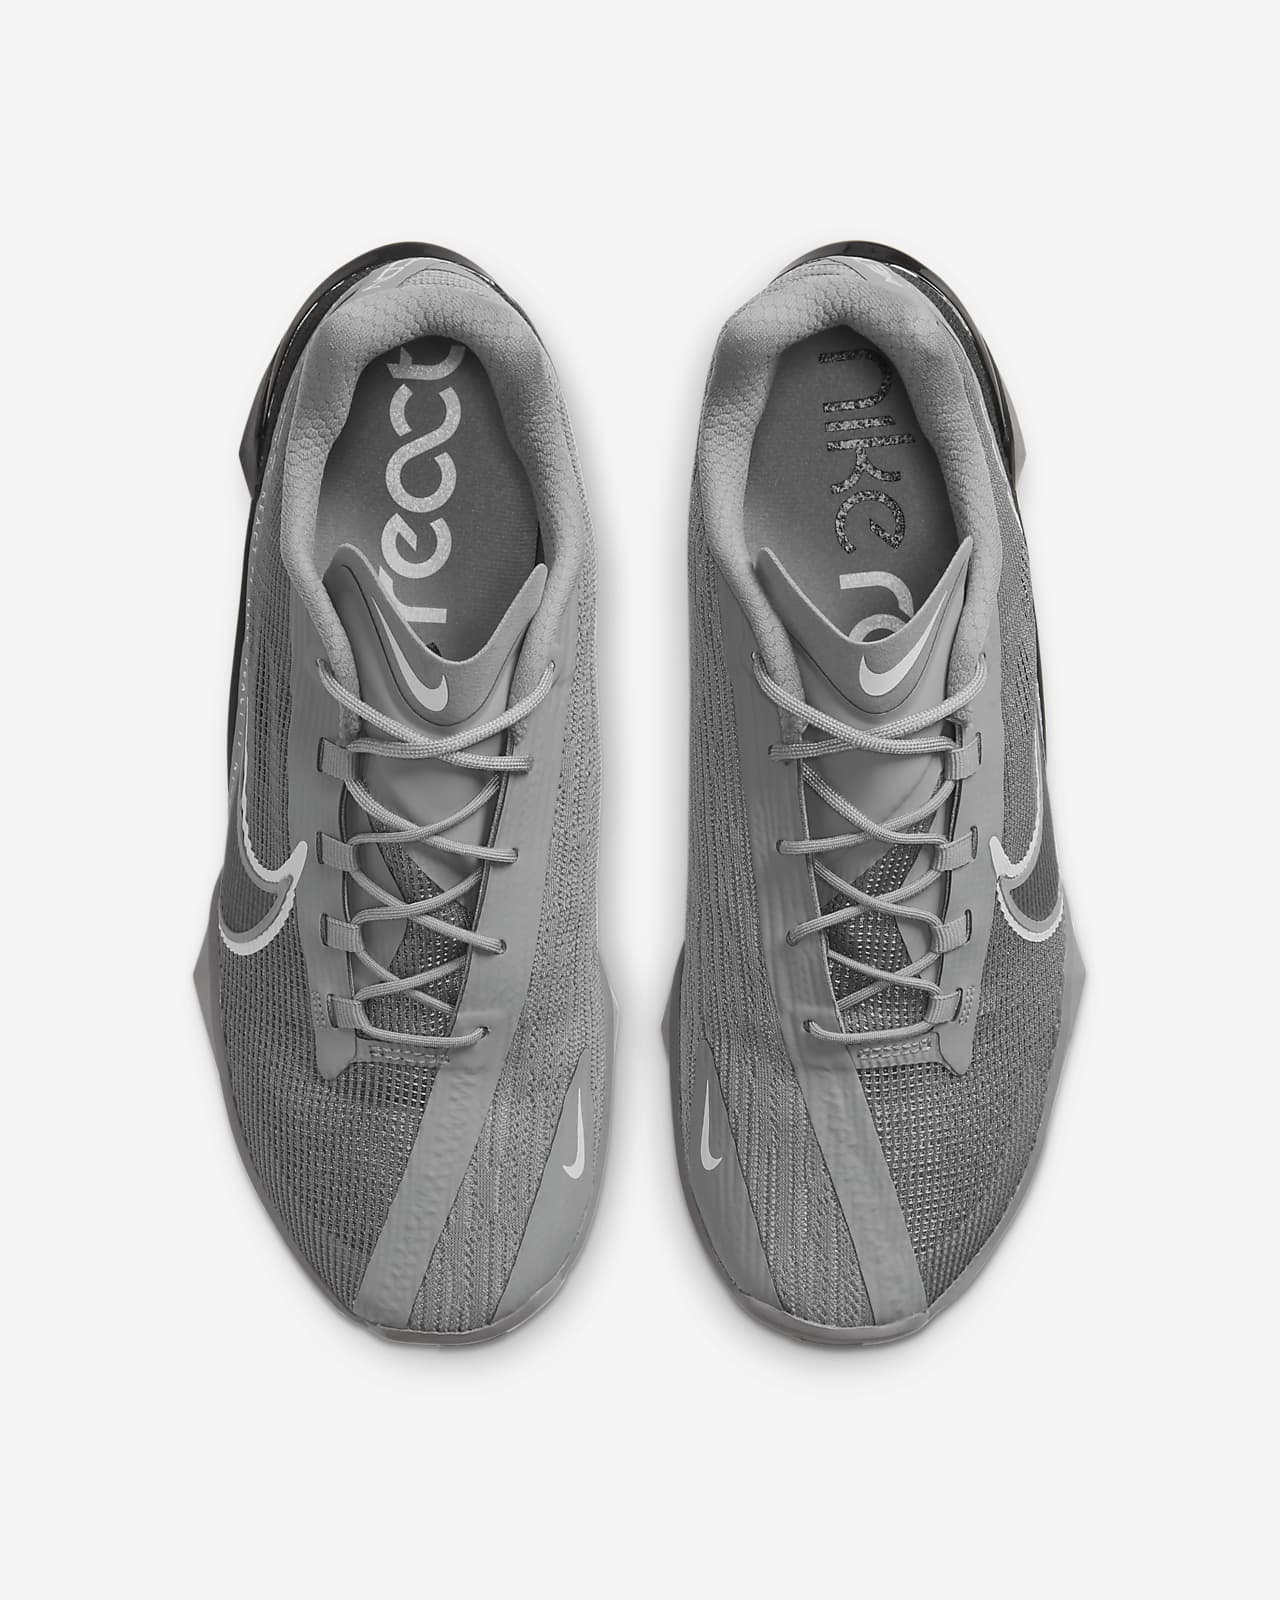 Nike React Metcon Turbo Training Shoes